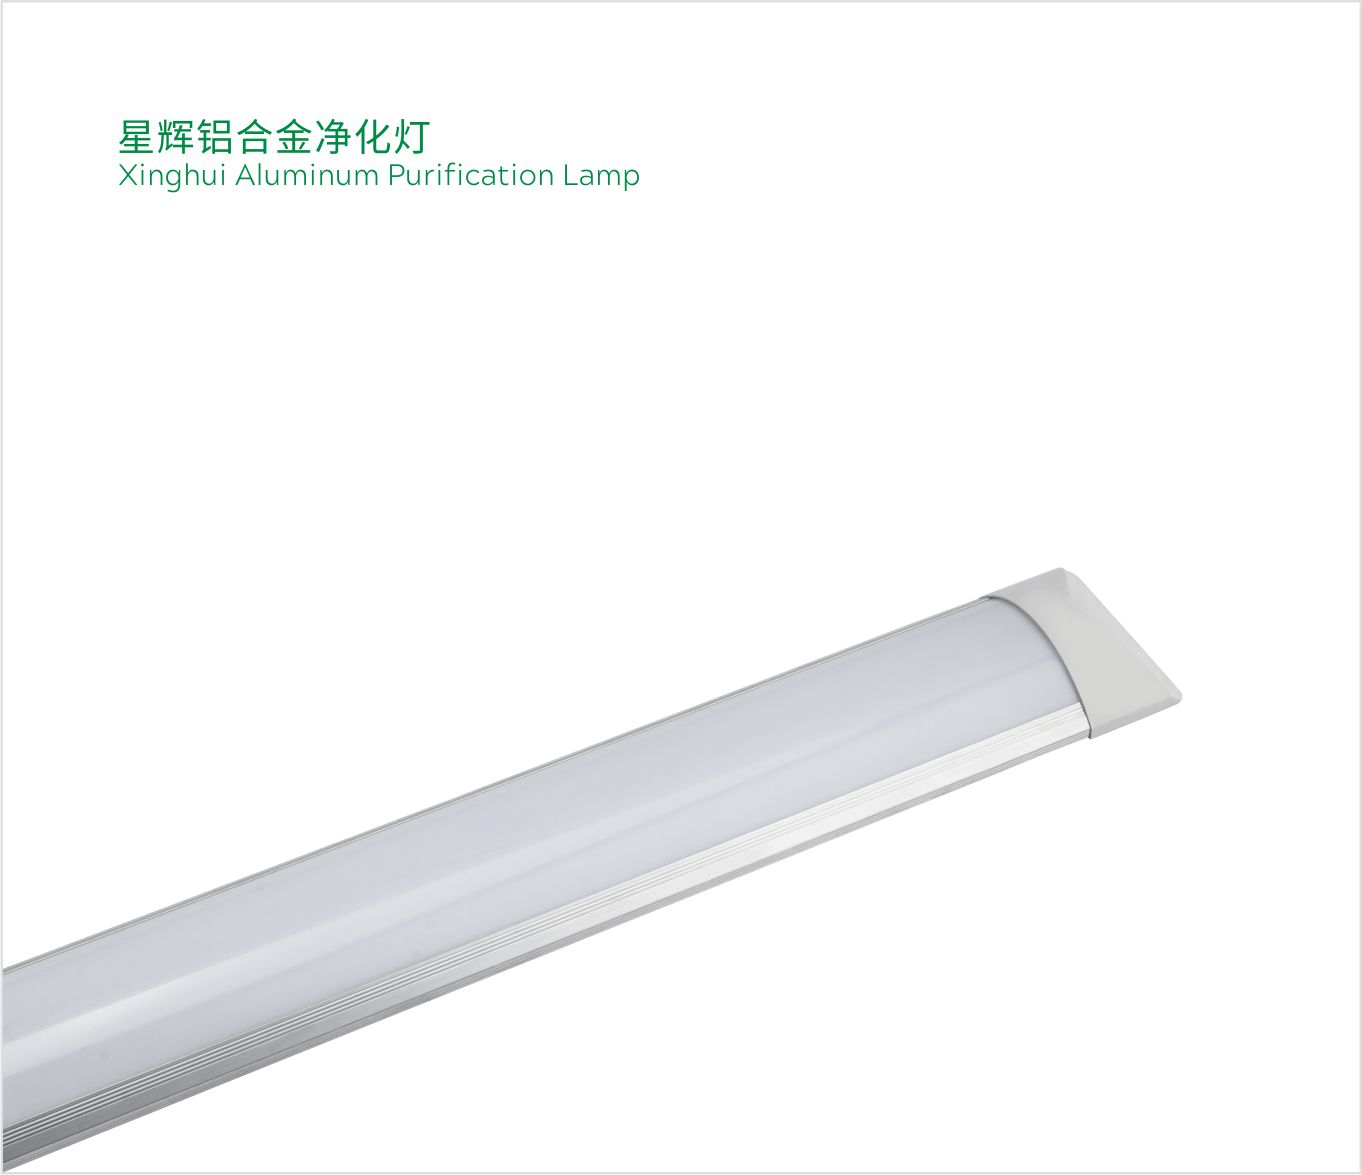 Aluminum Purification Lamp